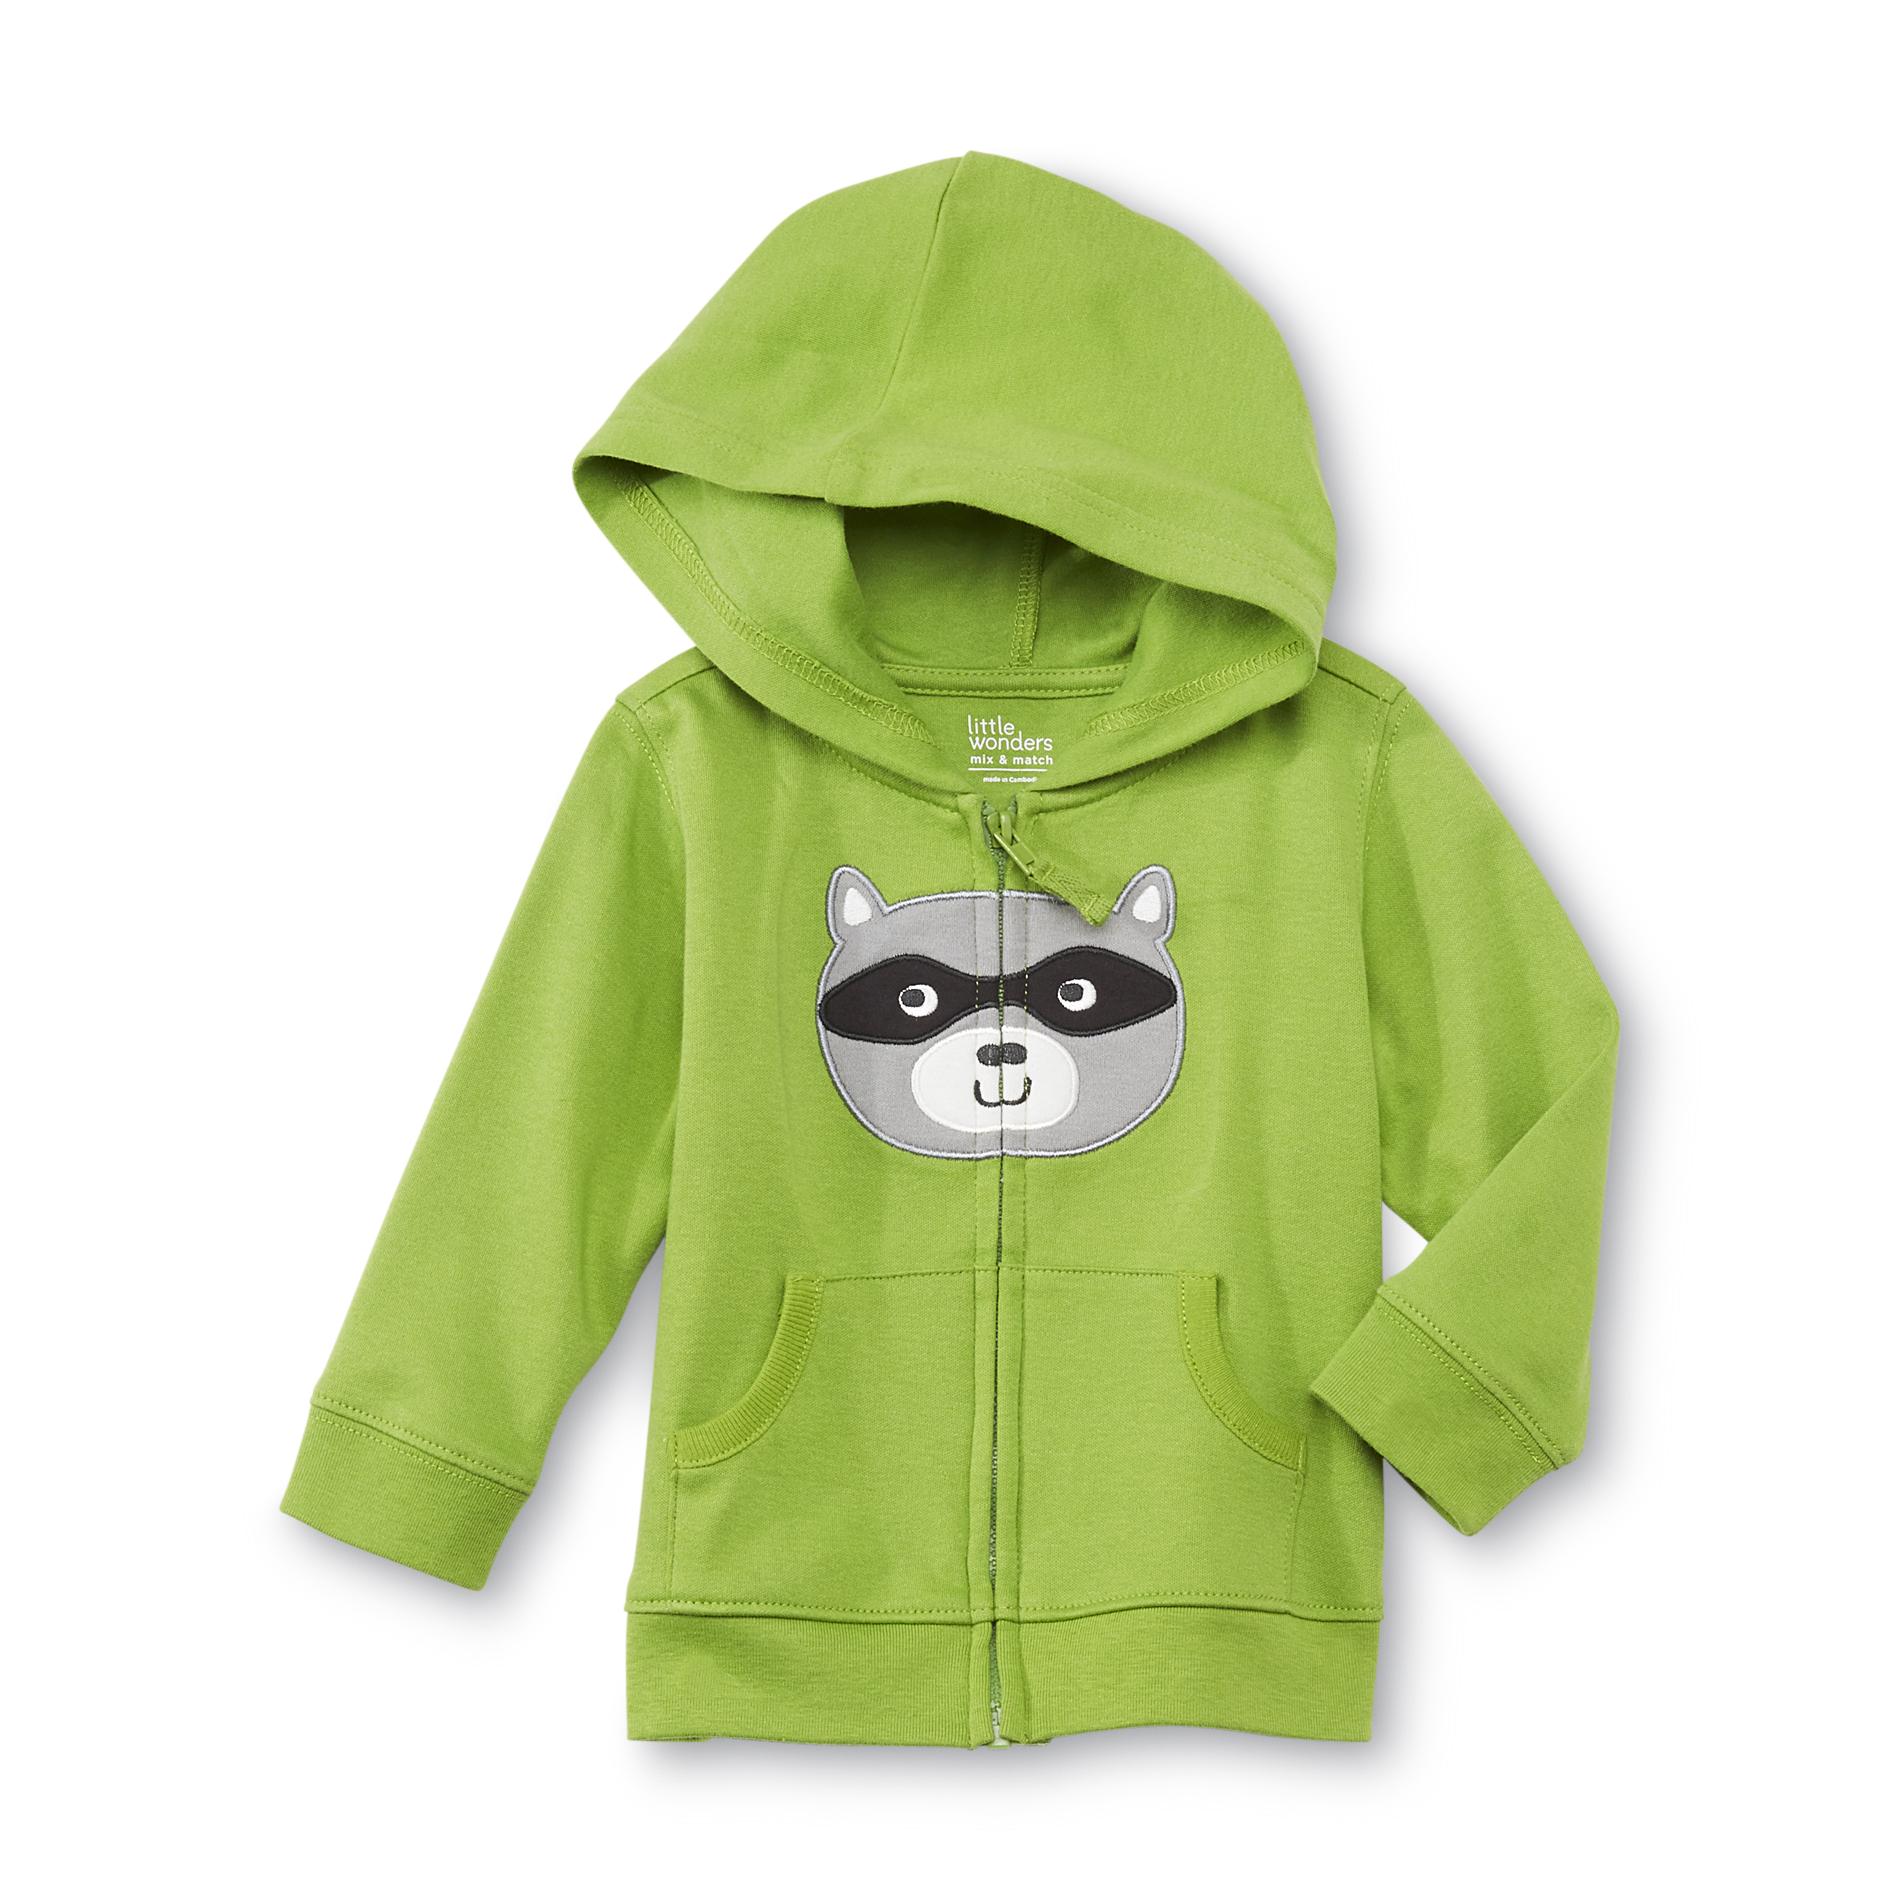 Little Wonders Newborn & Infant Boy's Hoodie Jacket - Raccoon